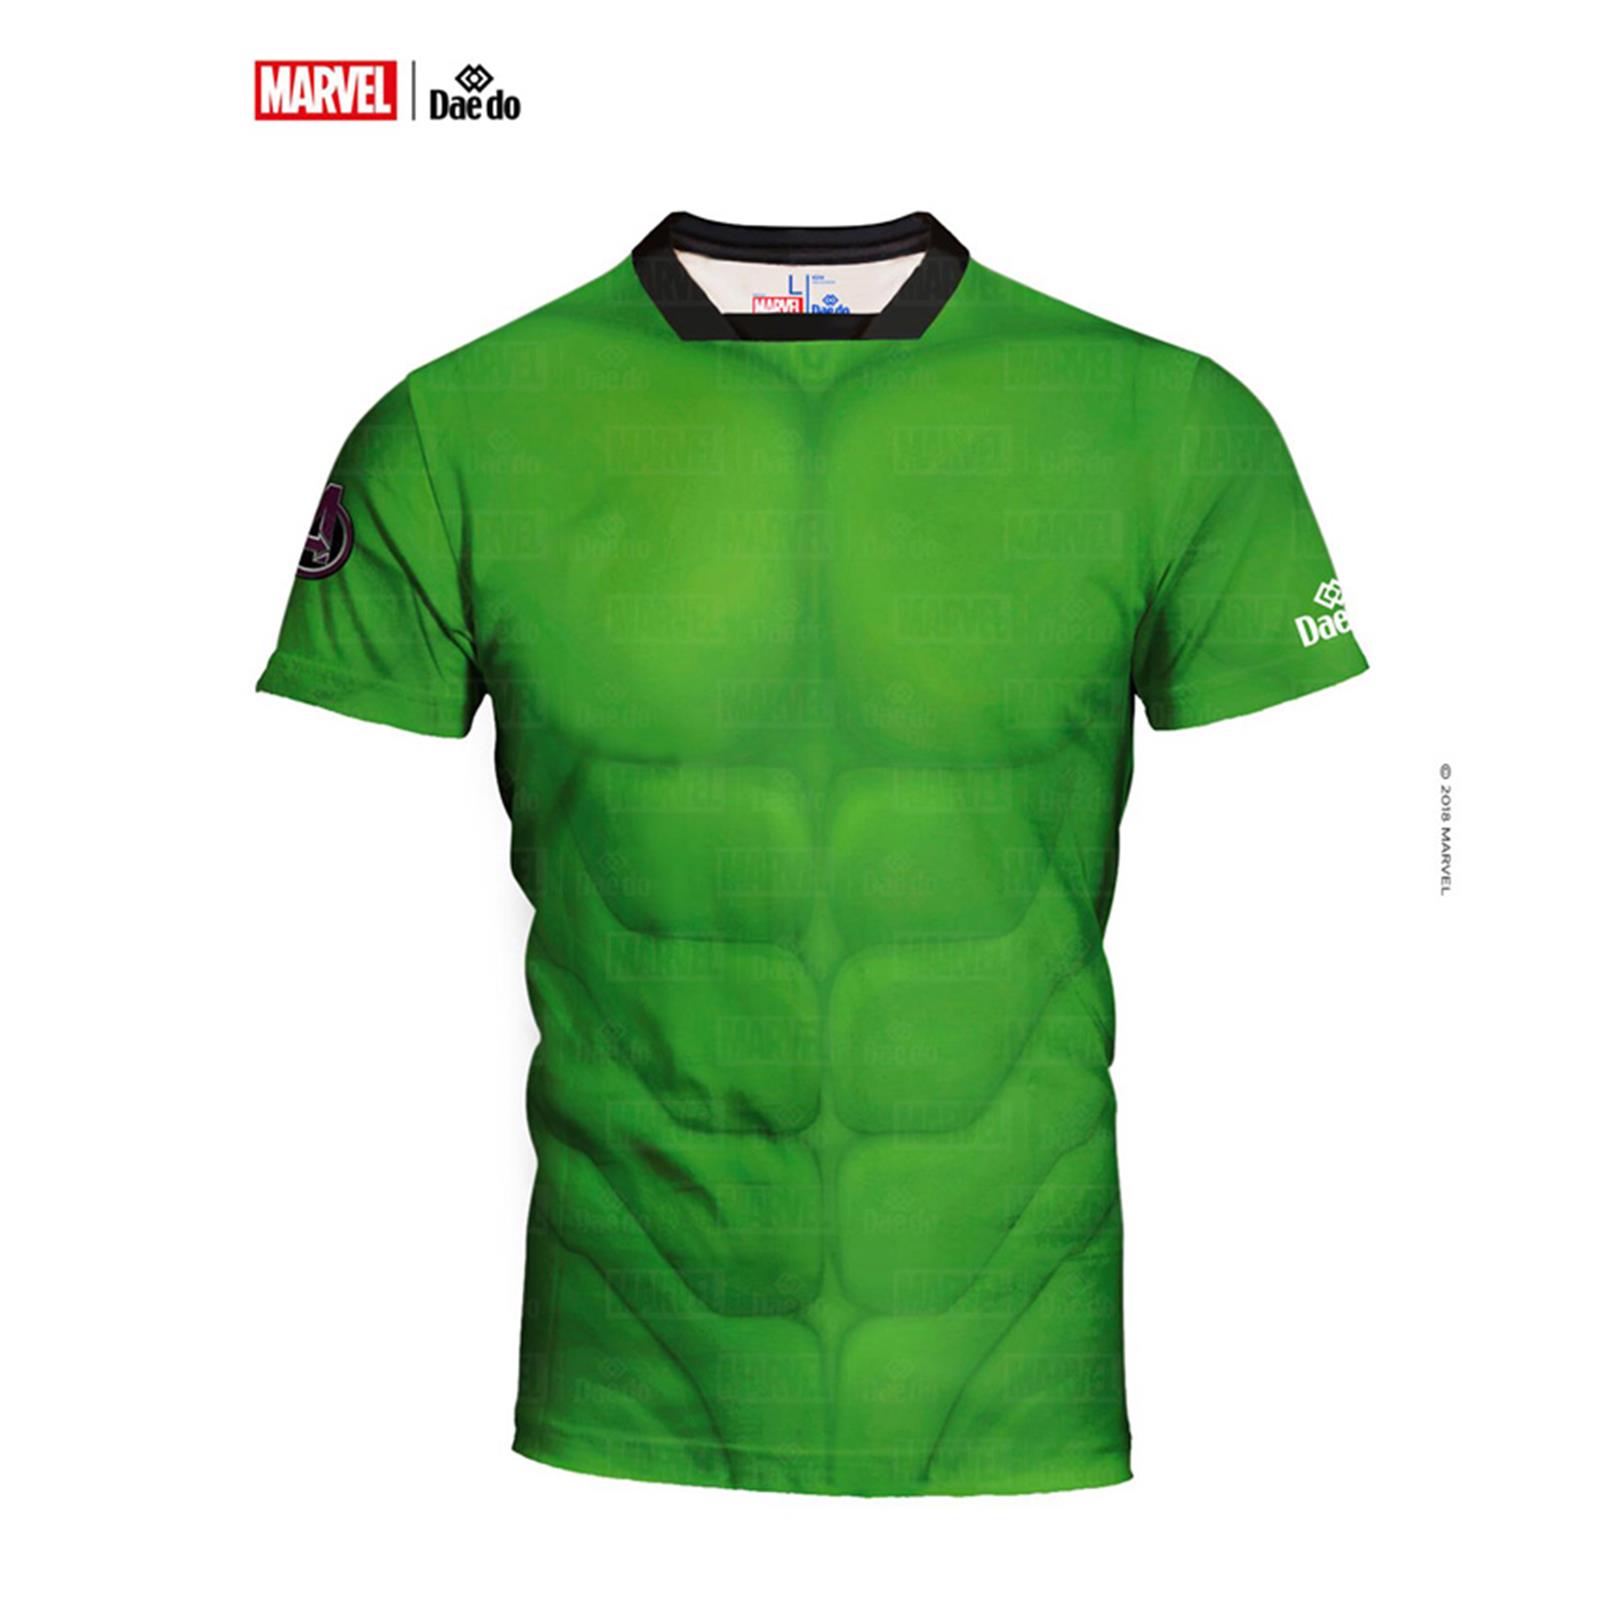 Dae Do Maglietta Hulk Full Print Slim Fit (14 - VERDE)